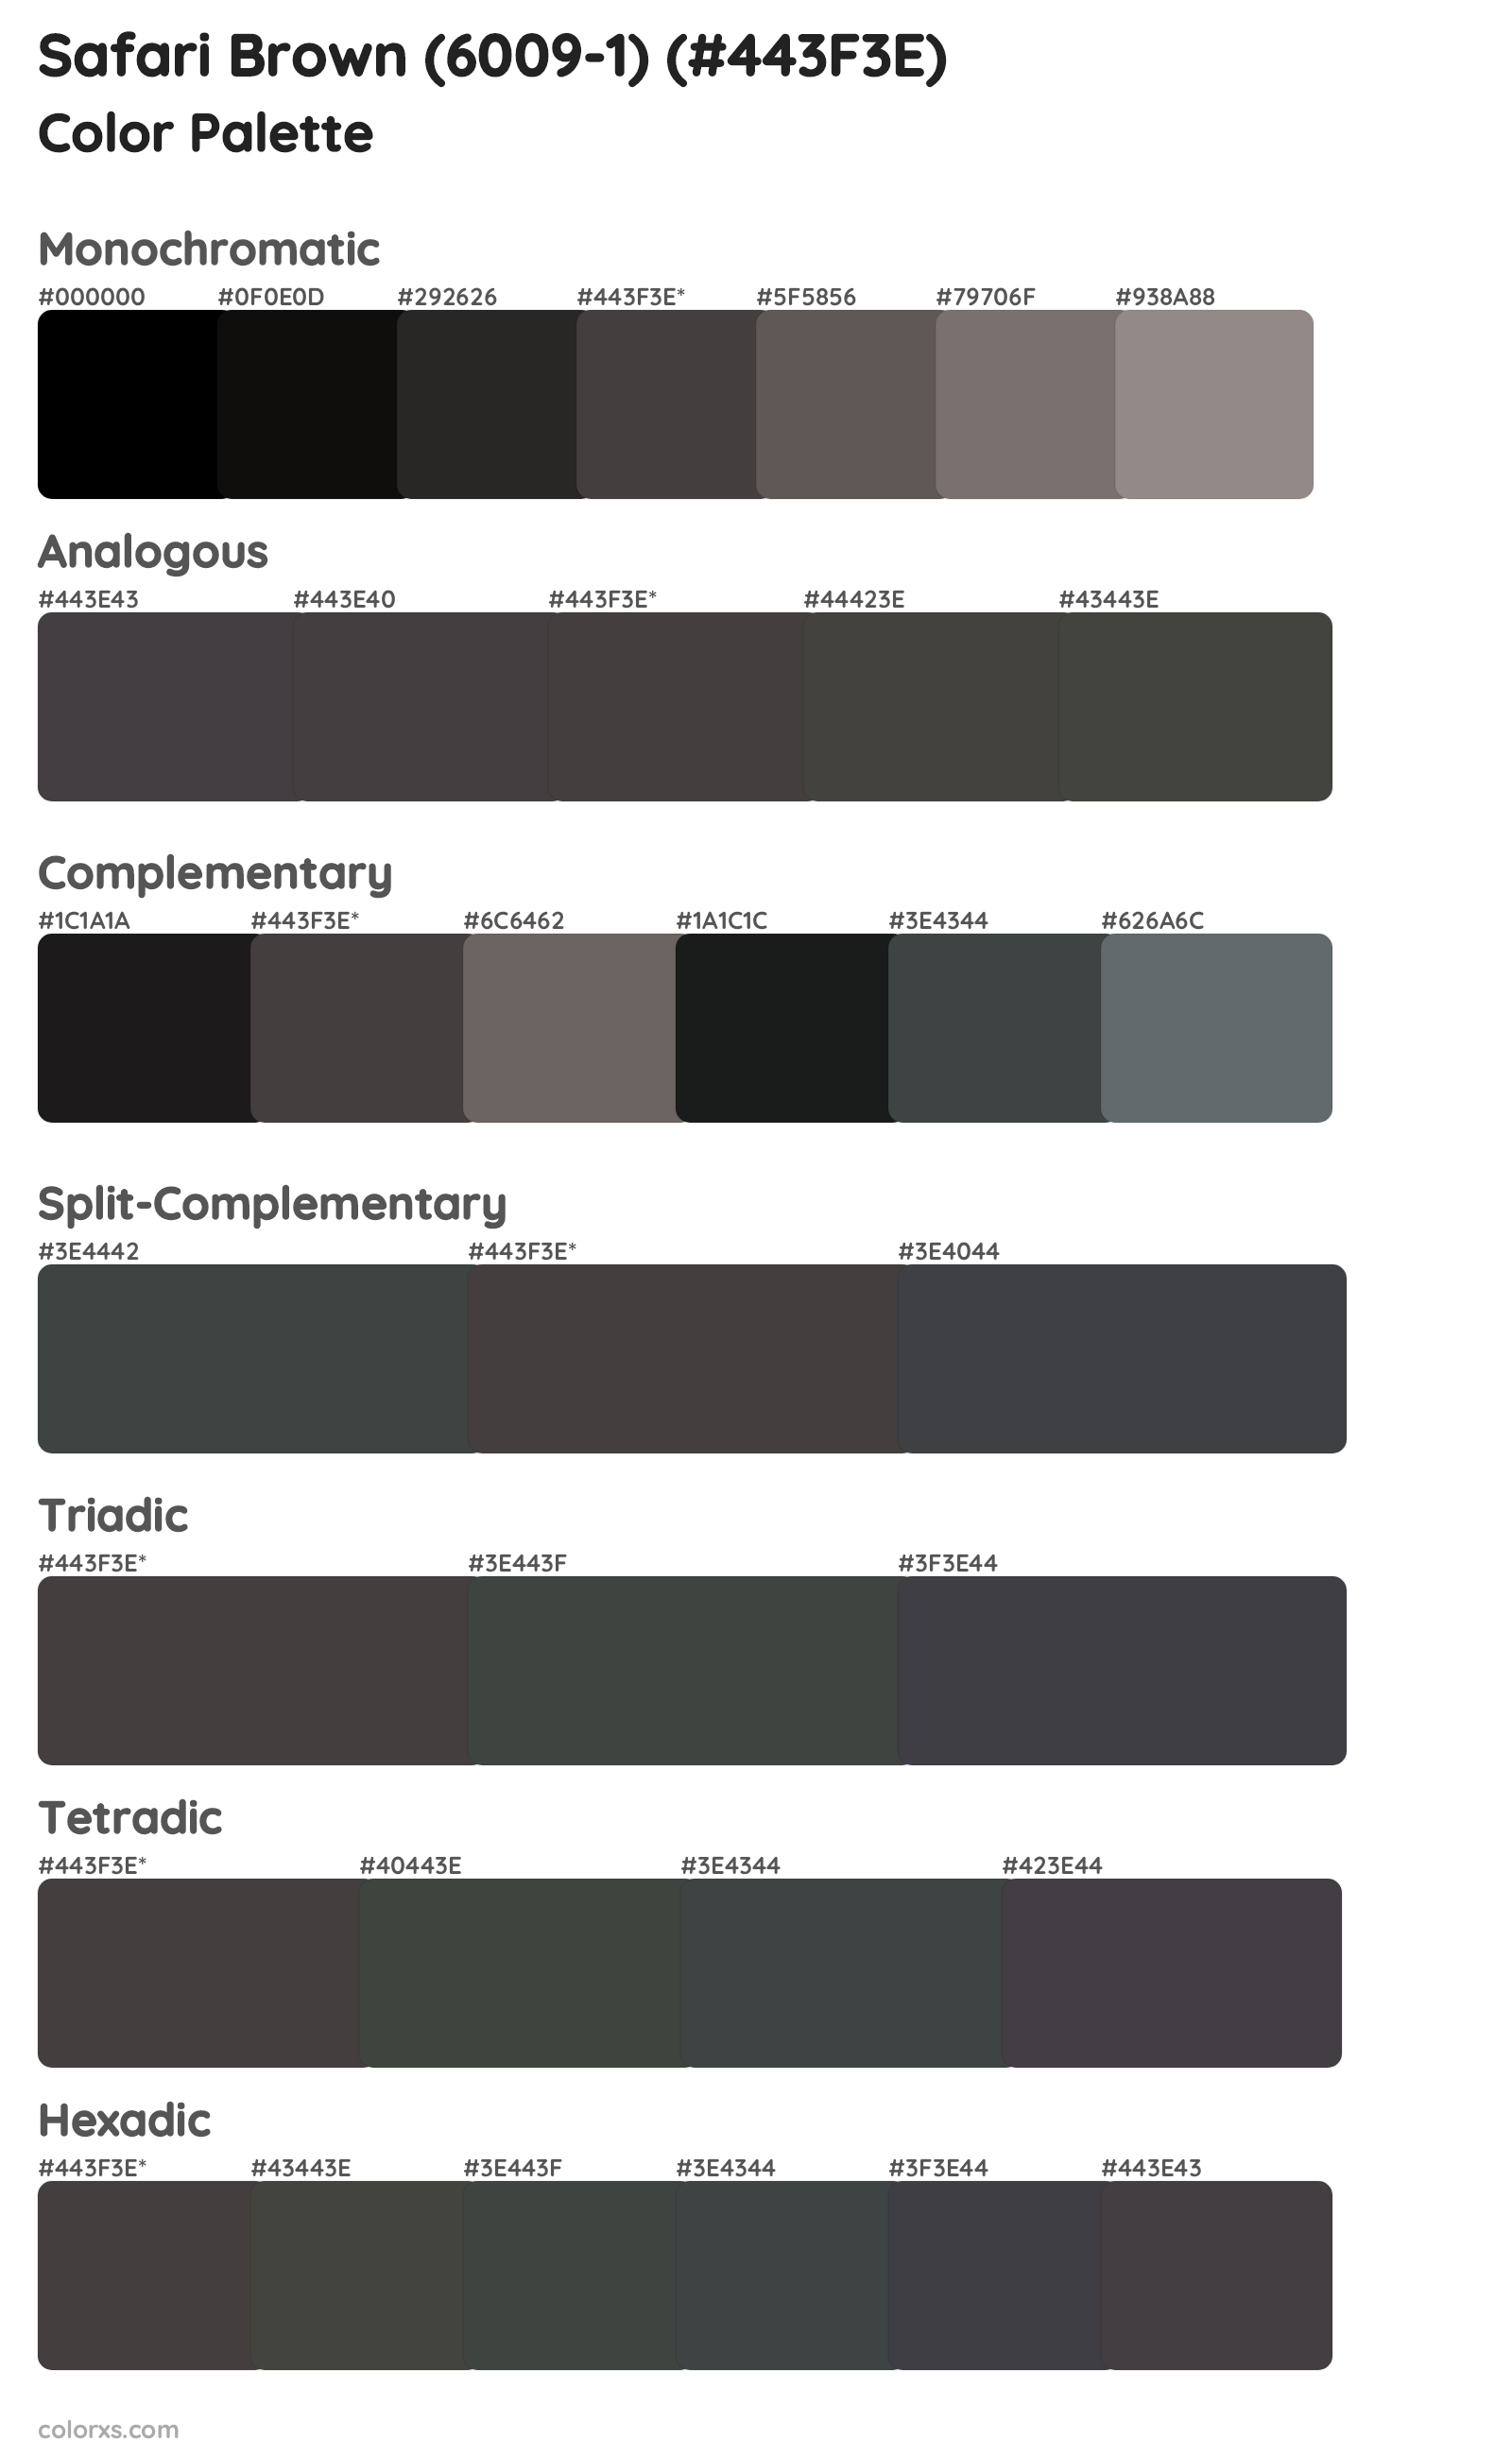 Safari Brown (6009-1) Color Scheme Palettes